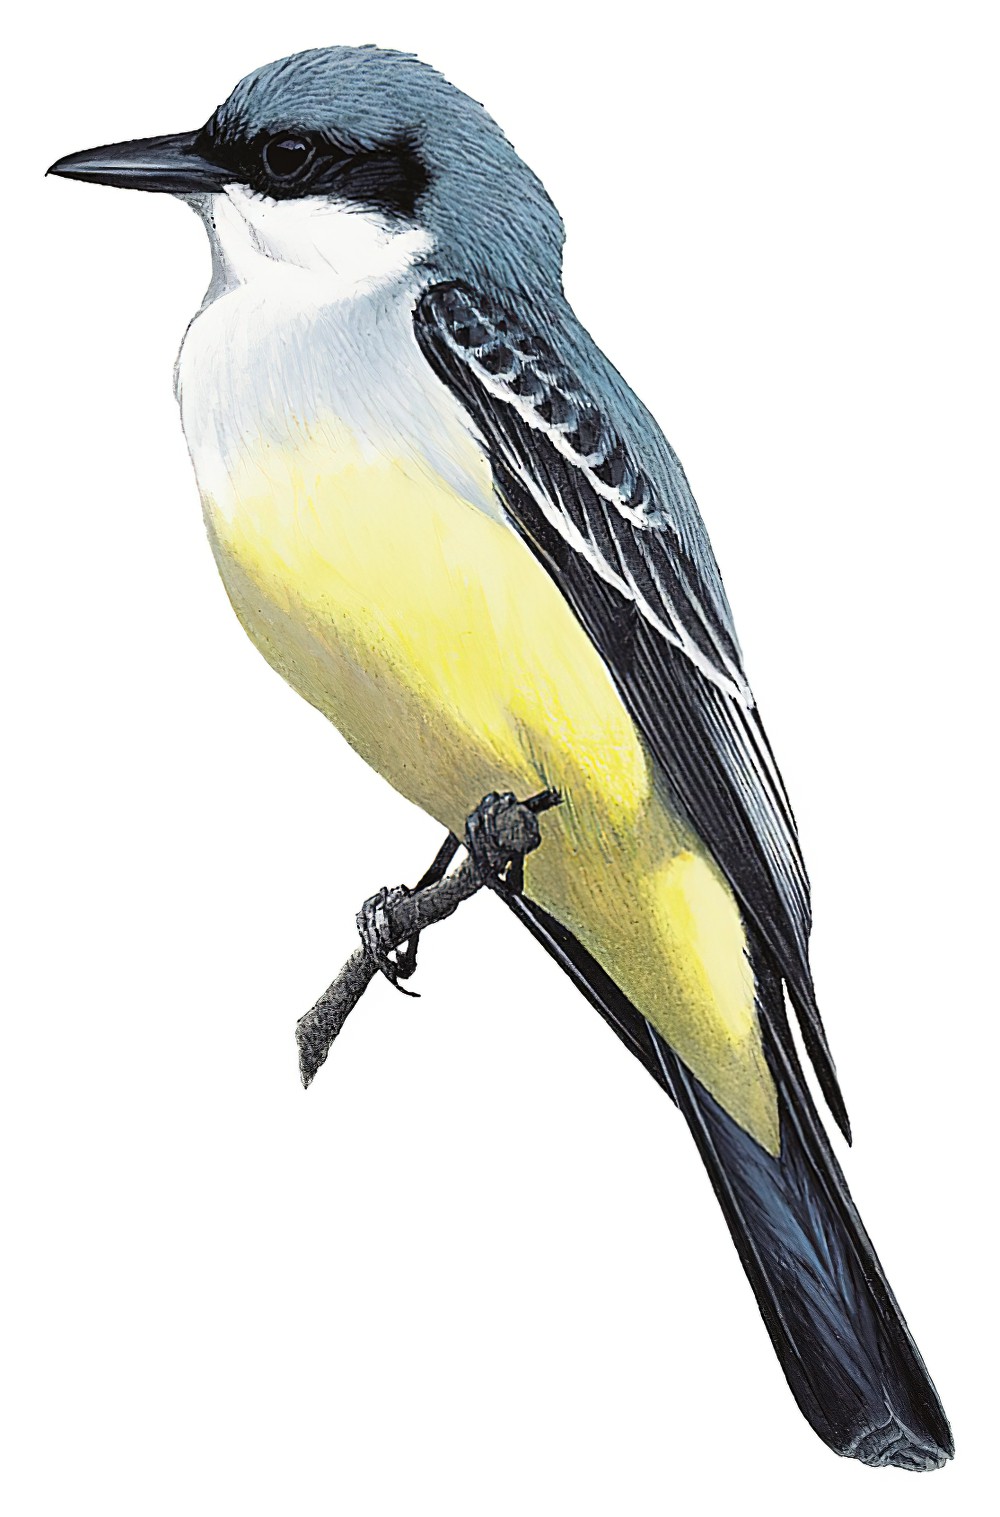 Snowy-throated Kingbird / Tyrannus niveigularis